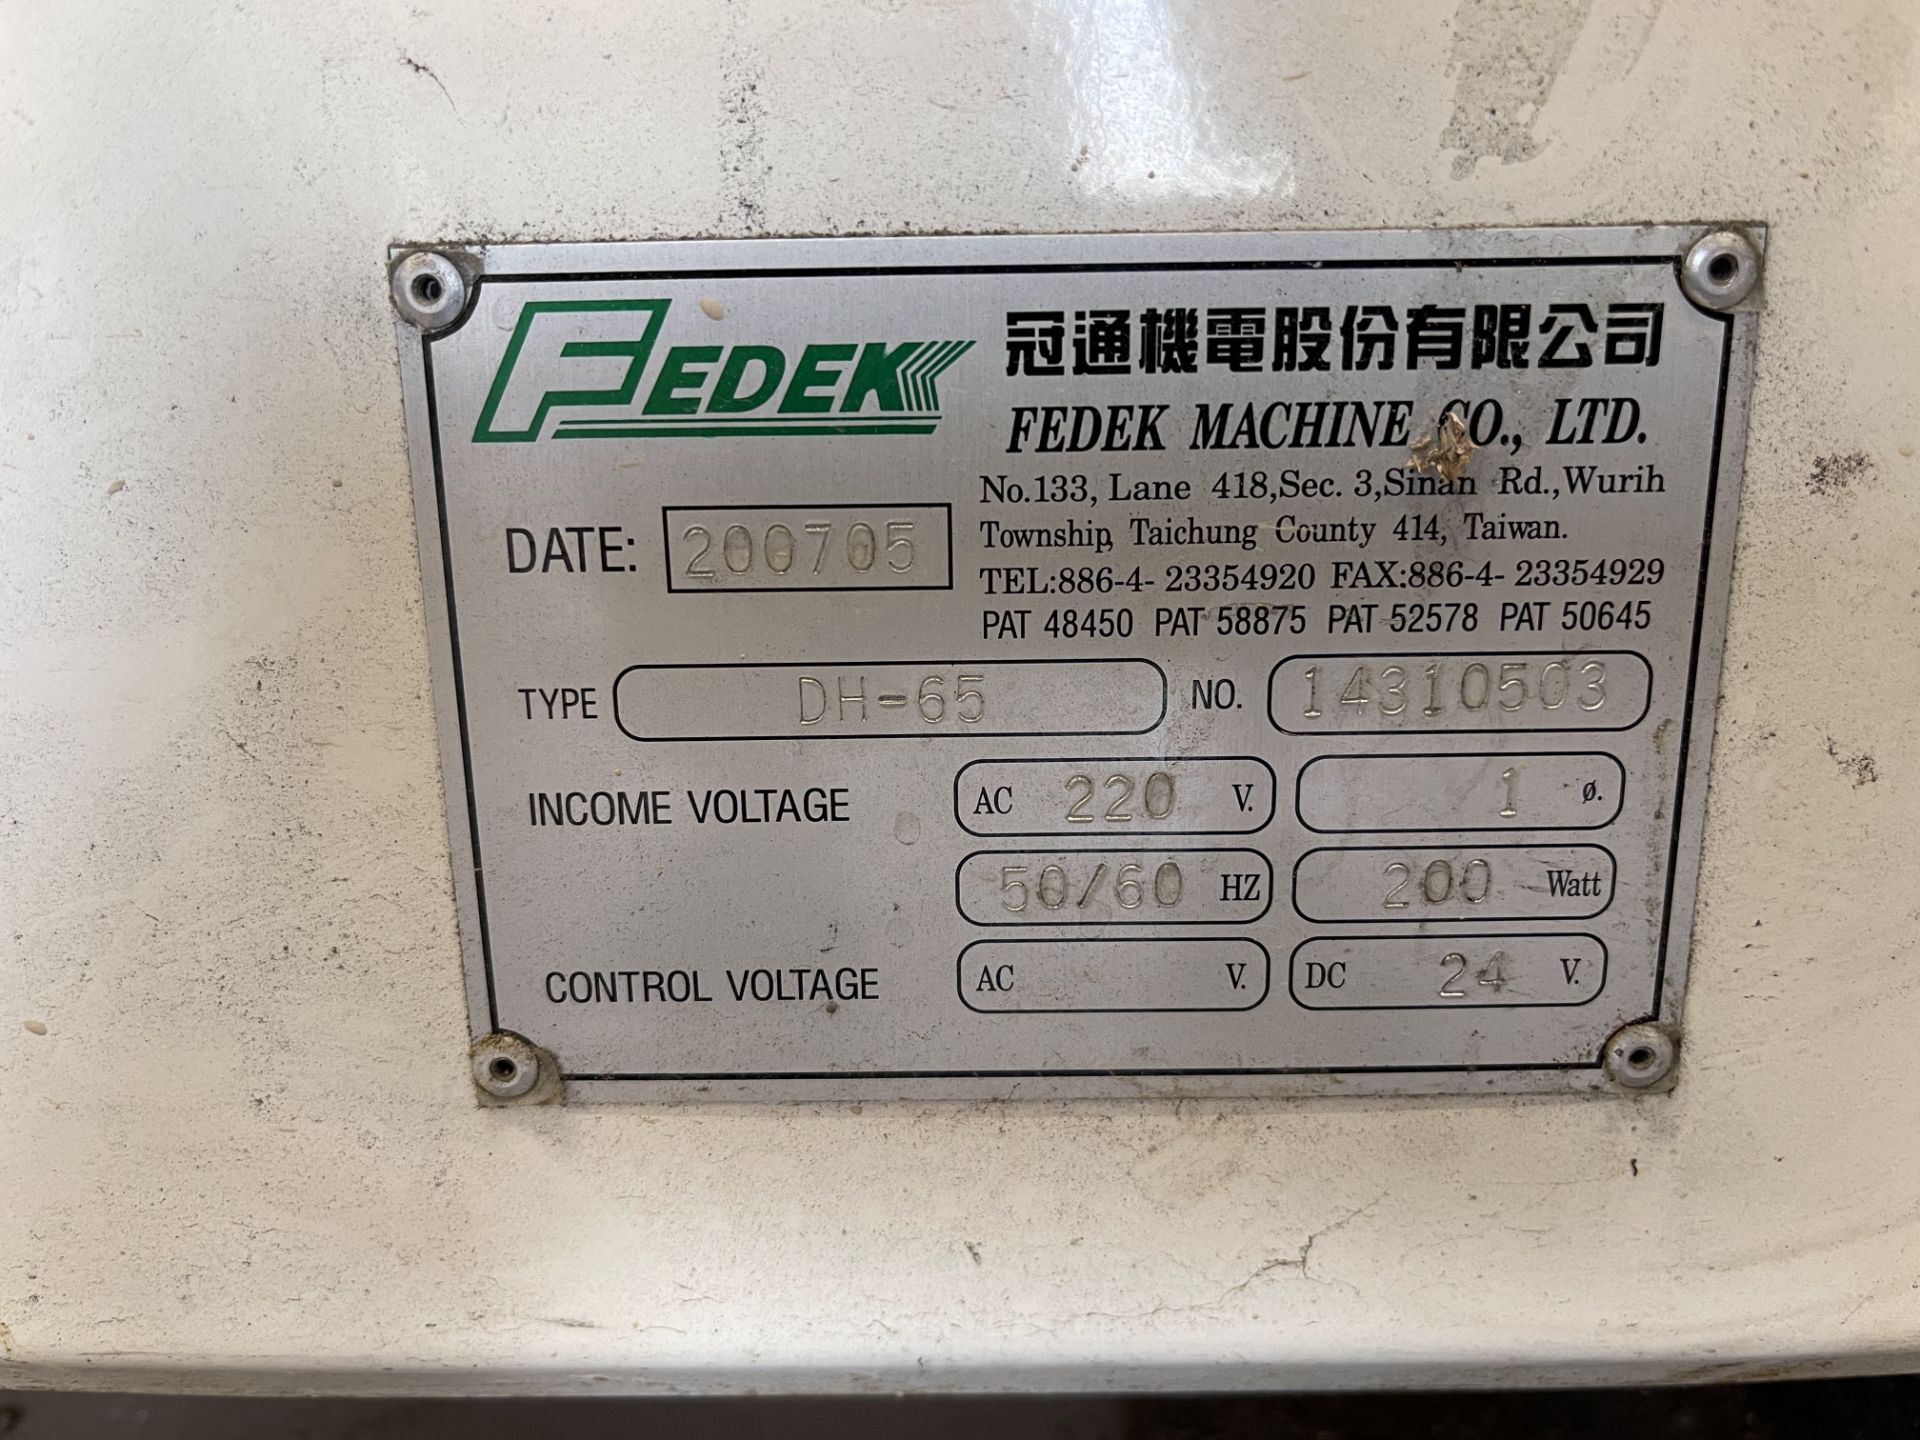 Fedek DH65 bar feeder for CNC Lathe, Serial # 14310503. 220 volt, single phase - Image 3 of 8